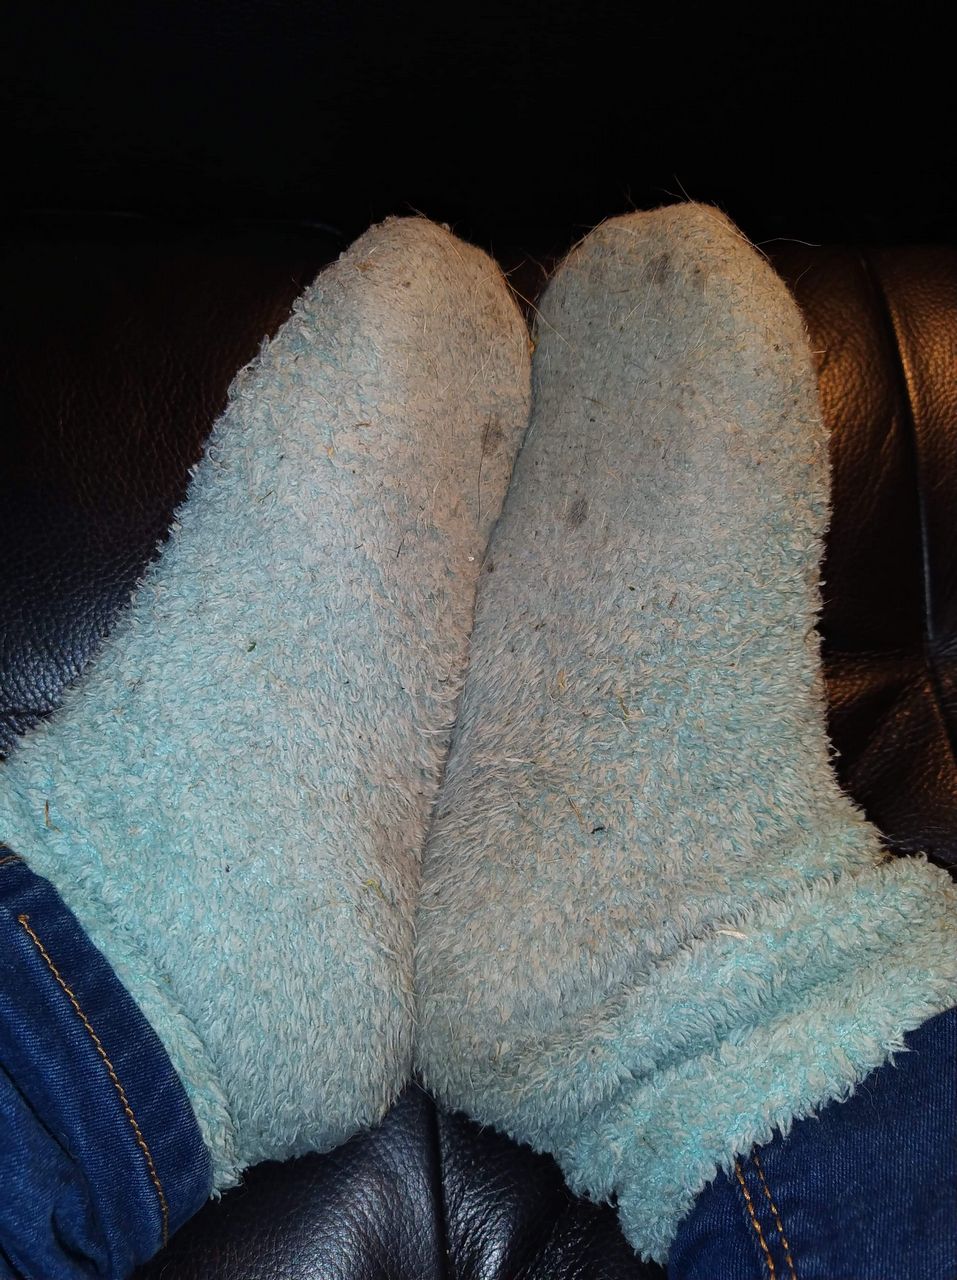 Tiptoes How Do You Like My Socks